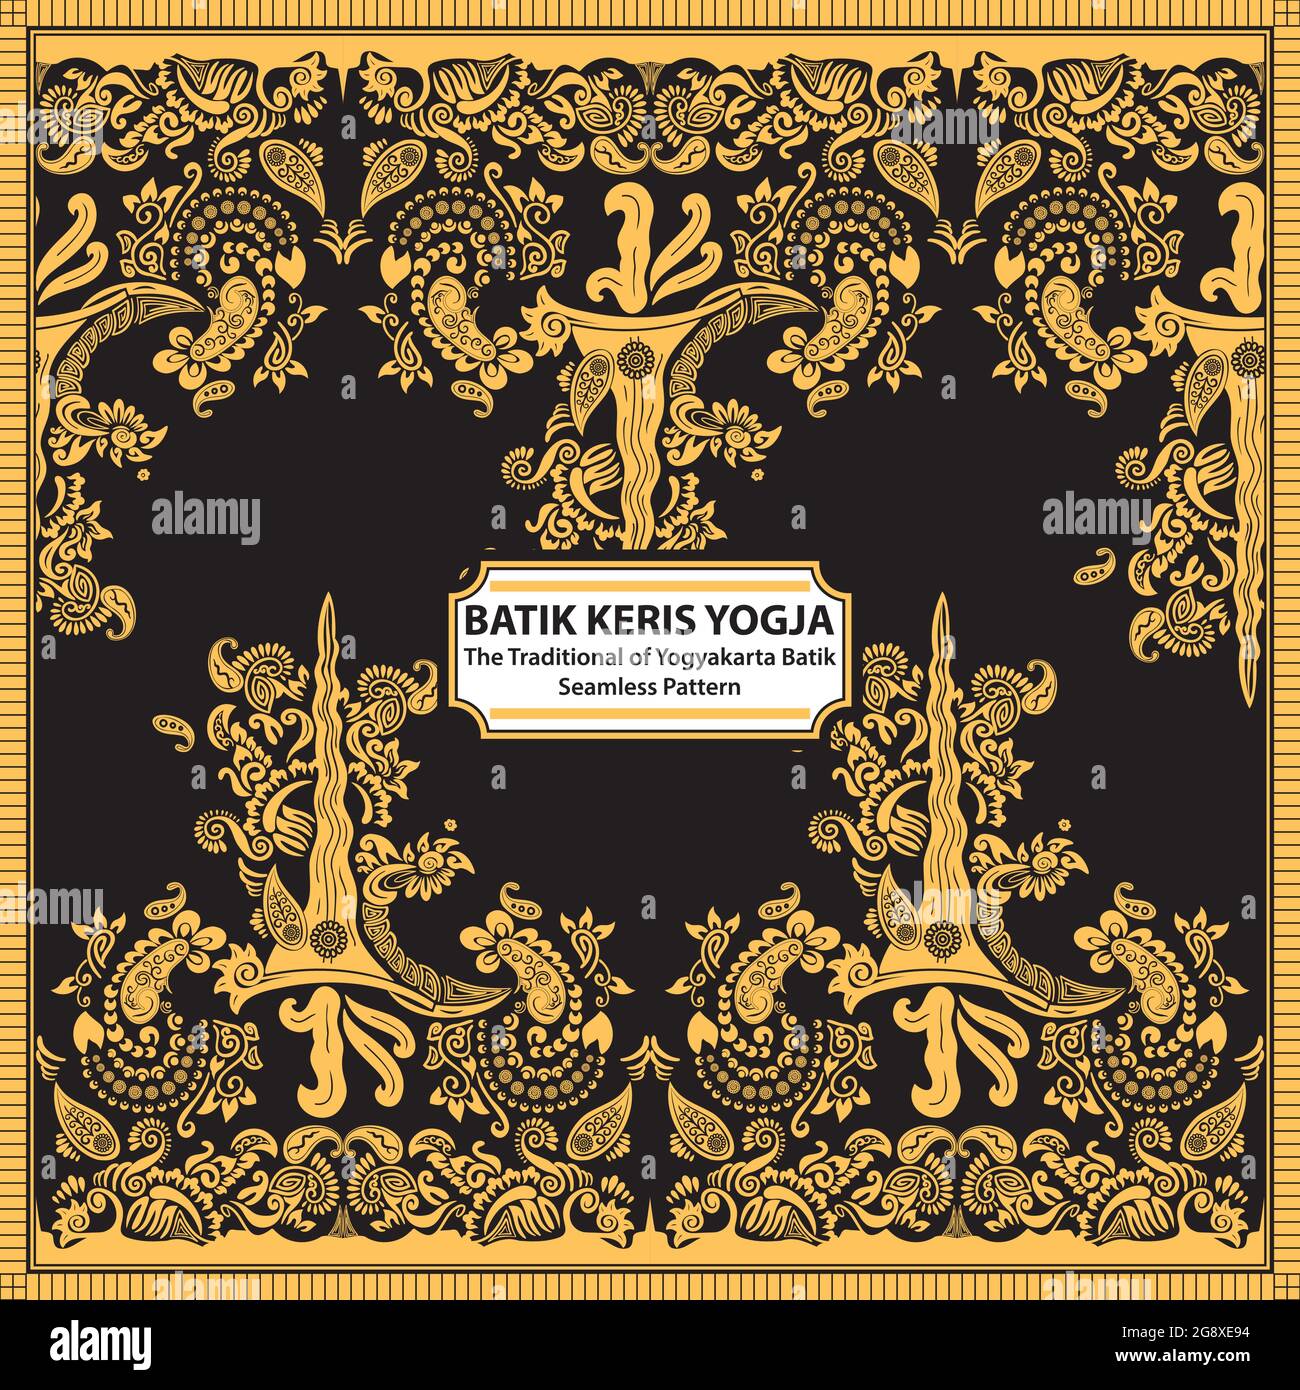 Batik Keris Yogja - The Traditional of Yogyakarta Batik Seamless Pattern Stock Vector